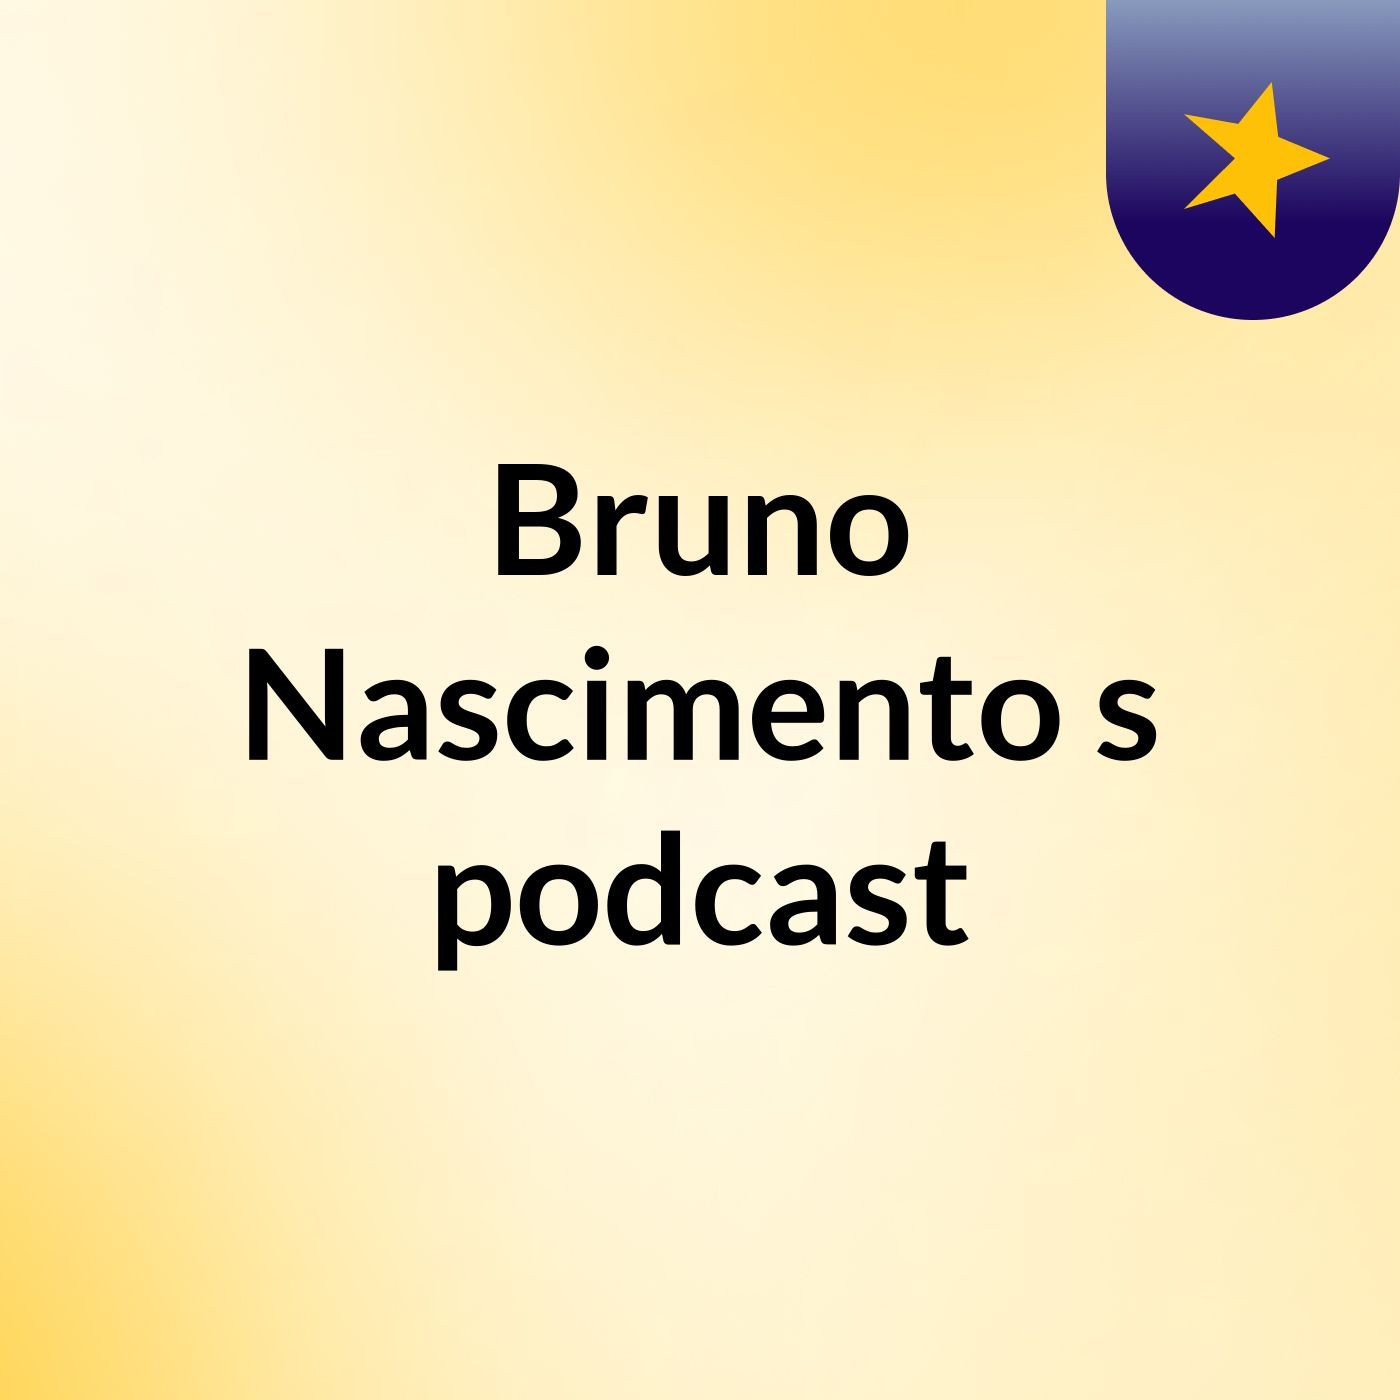 Bruno Nascimento's podcast